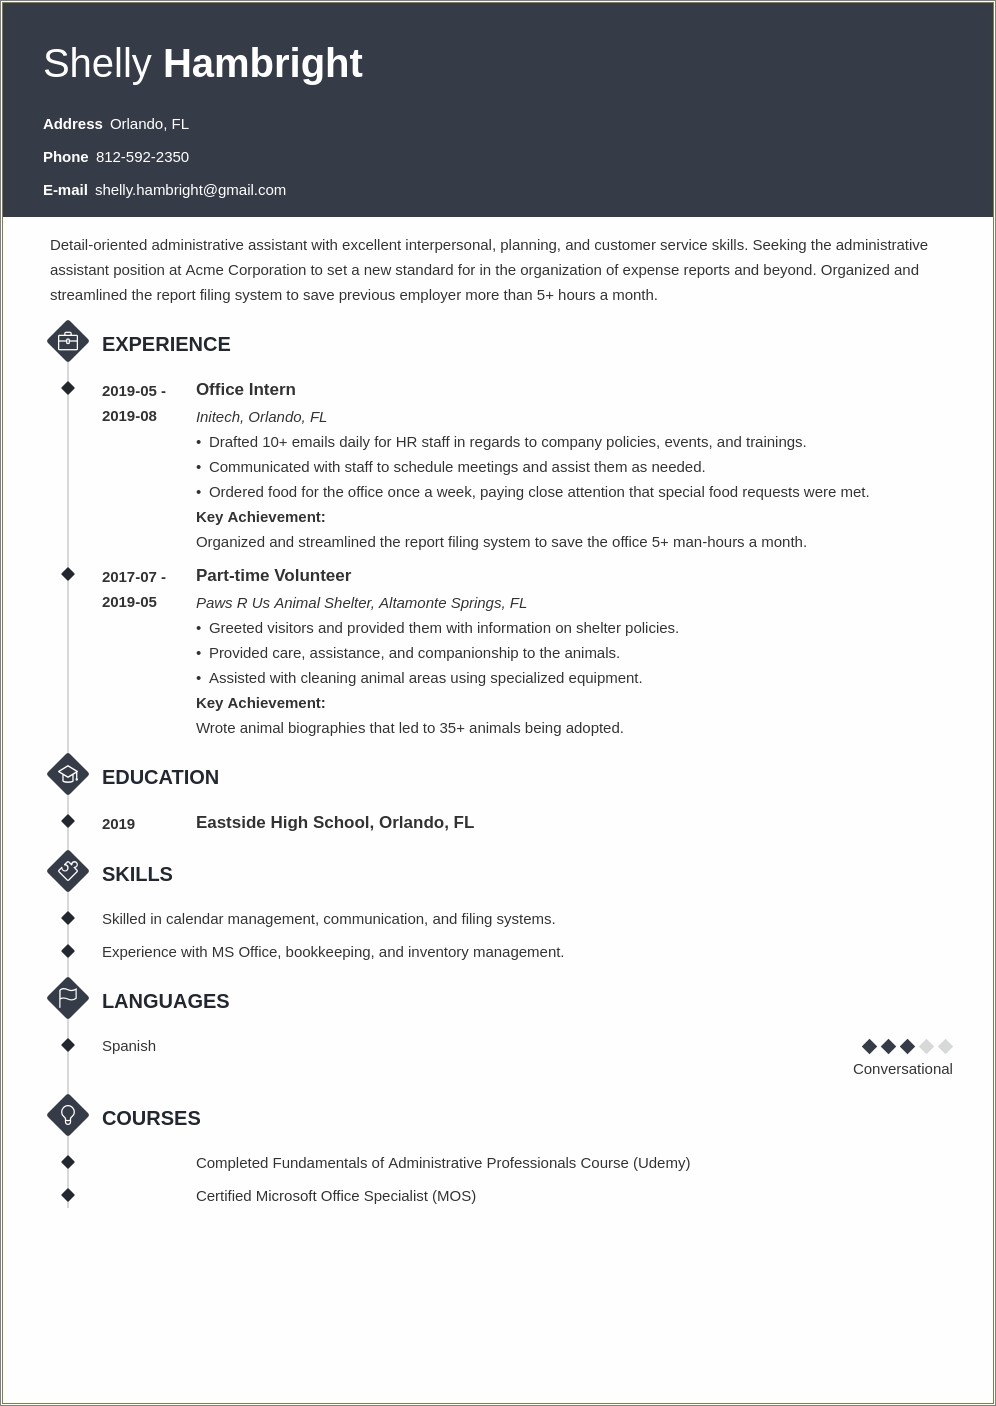 Administrative Assistant Job Description For Resume Examples